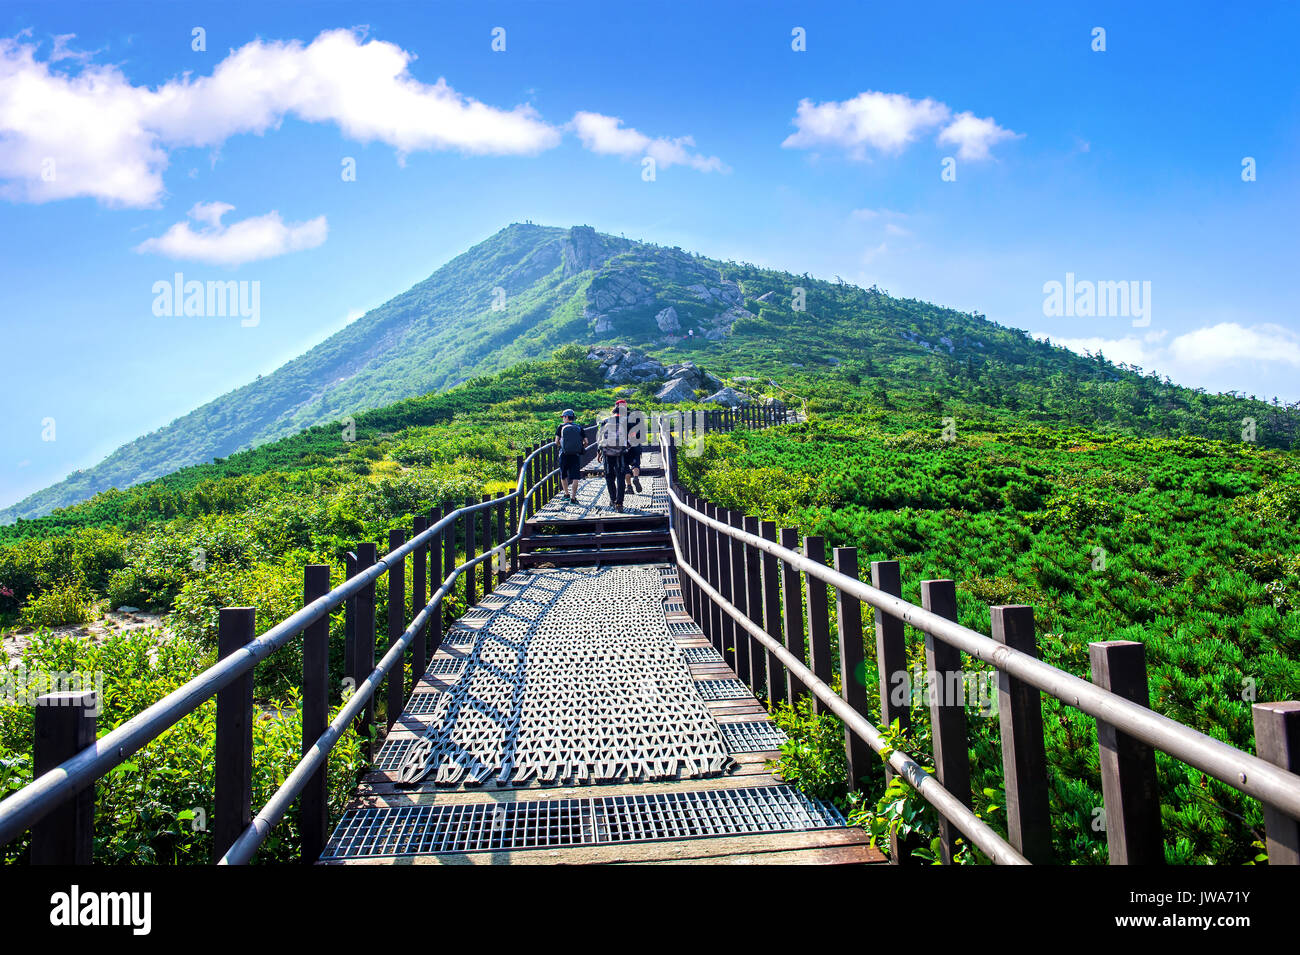 SEORAKSAN, KOREA - 7. AUGUST: Touristen fotografieren der schönen Landschaft um Seoraksan, Südkorea am 7. August 2015. Stockfoto